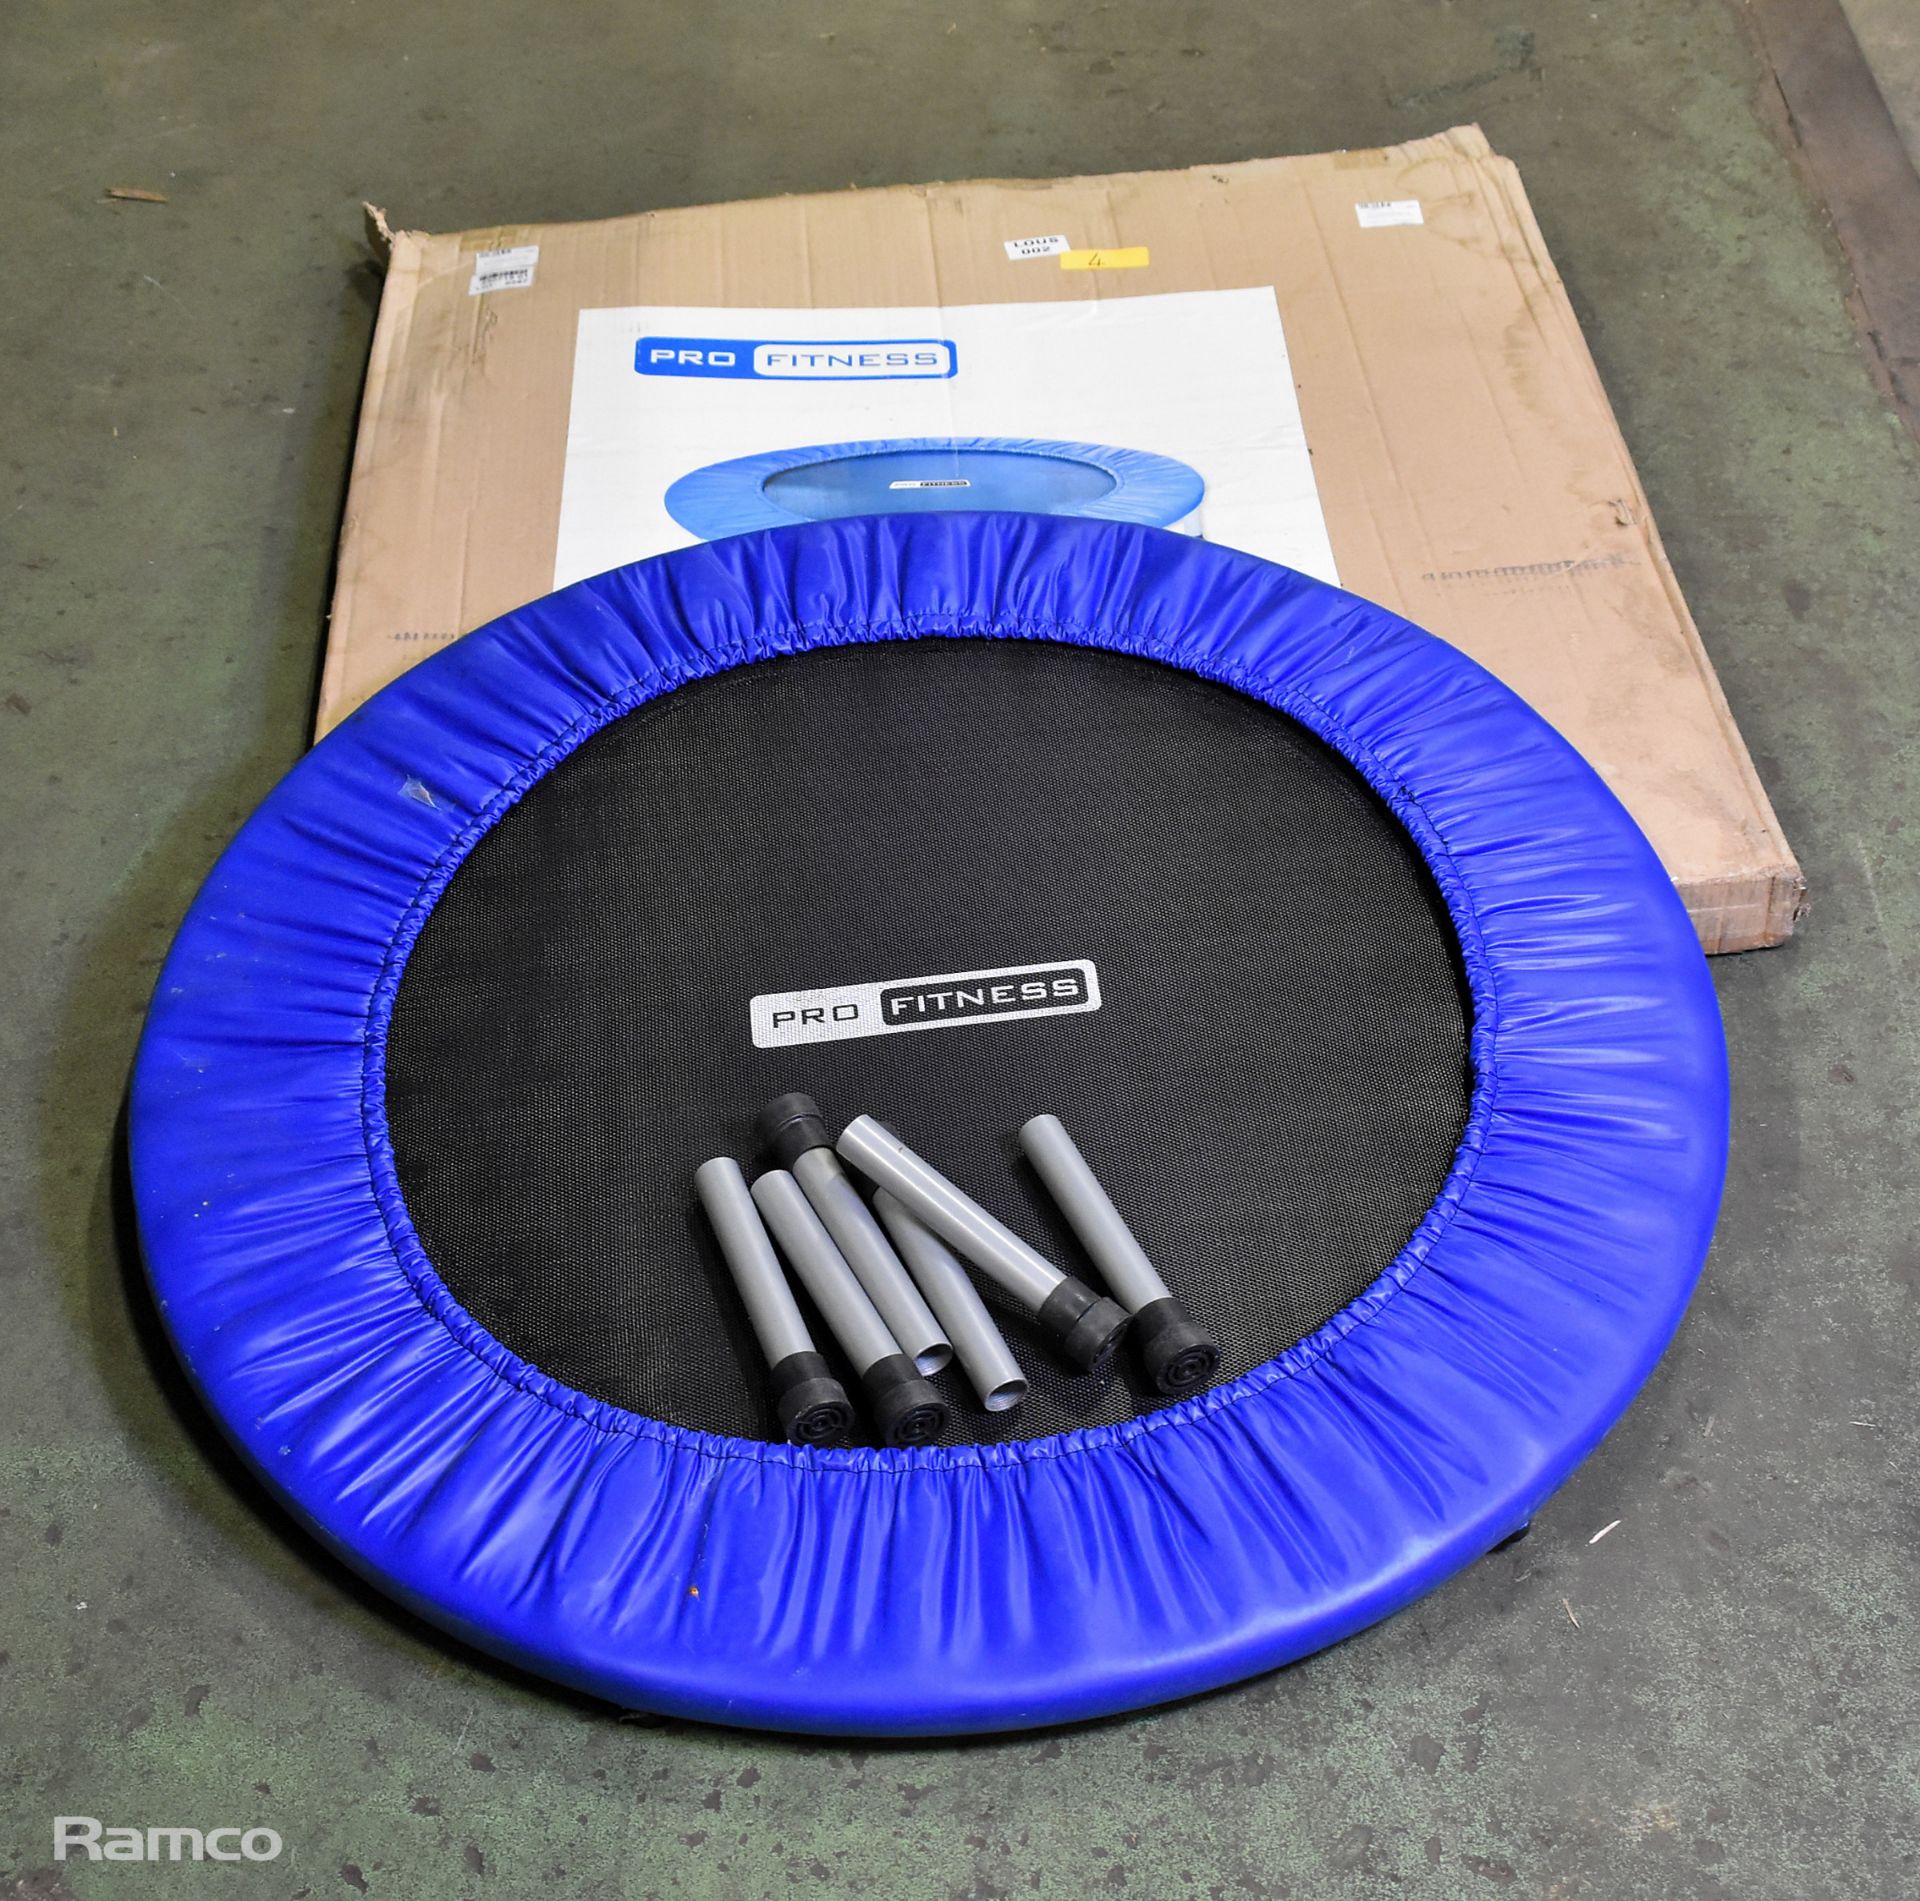 Pro Fitness trampoline - approx 900mm diameter